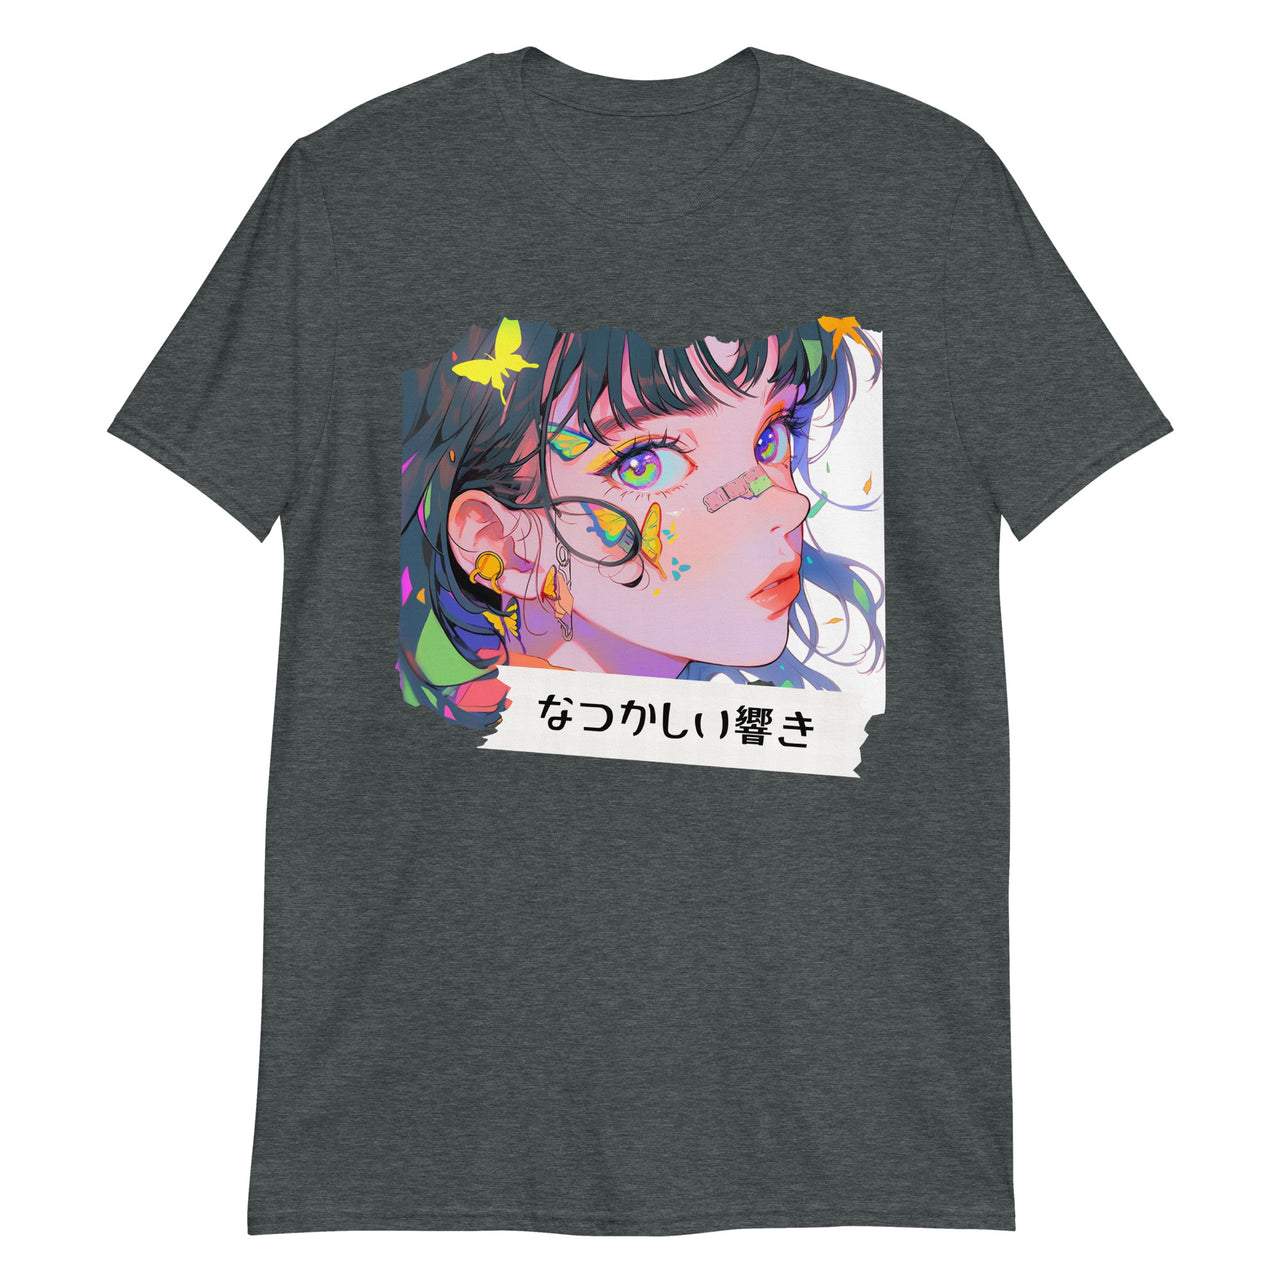 Anime Girl with Nostalgic Ring T-Shirt